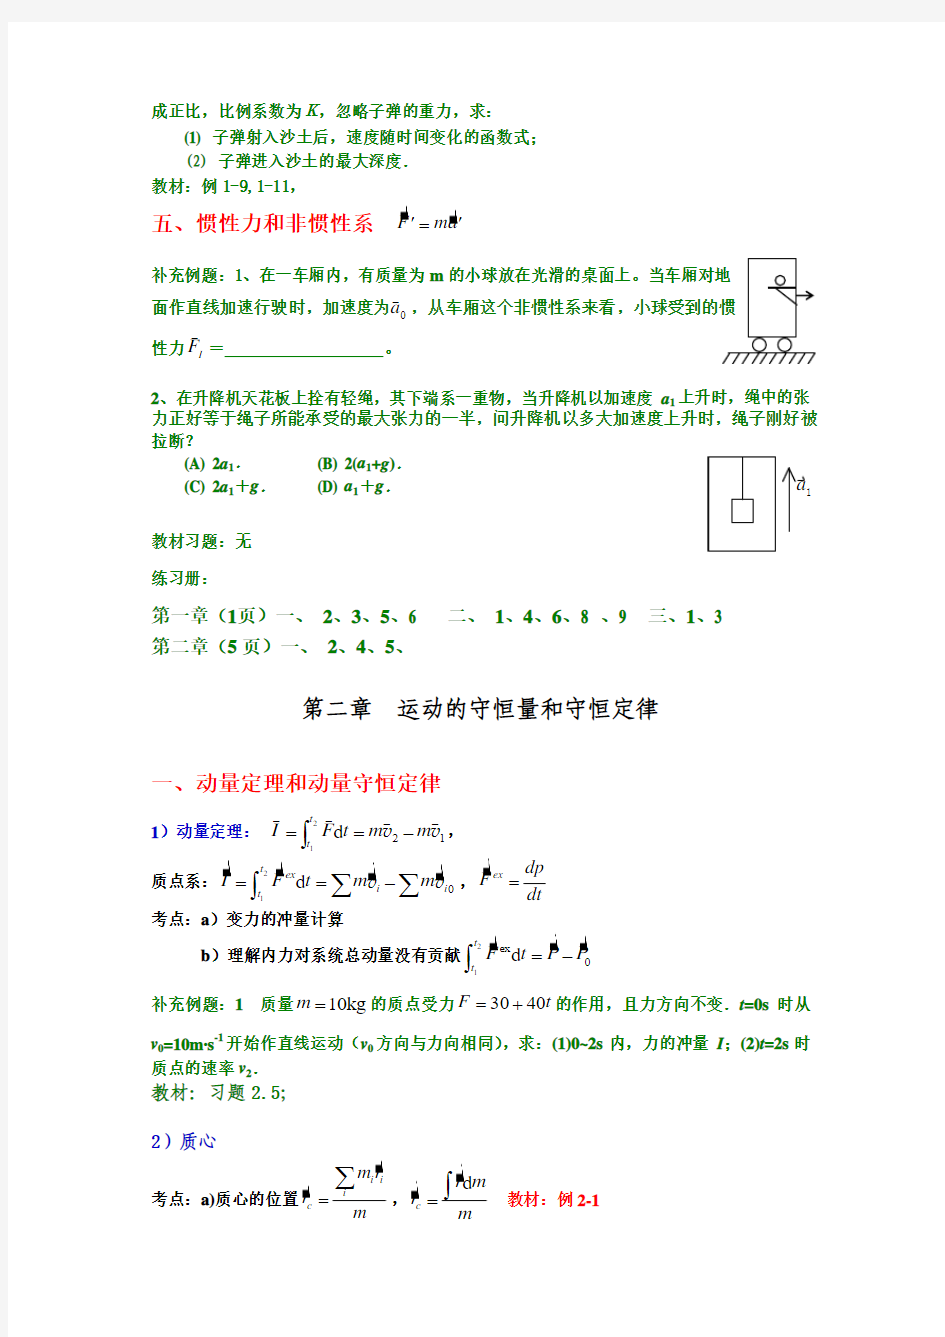 cxf2013-2014(2)大学物理1(上)期末考试知识点要求